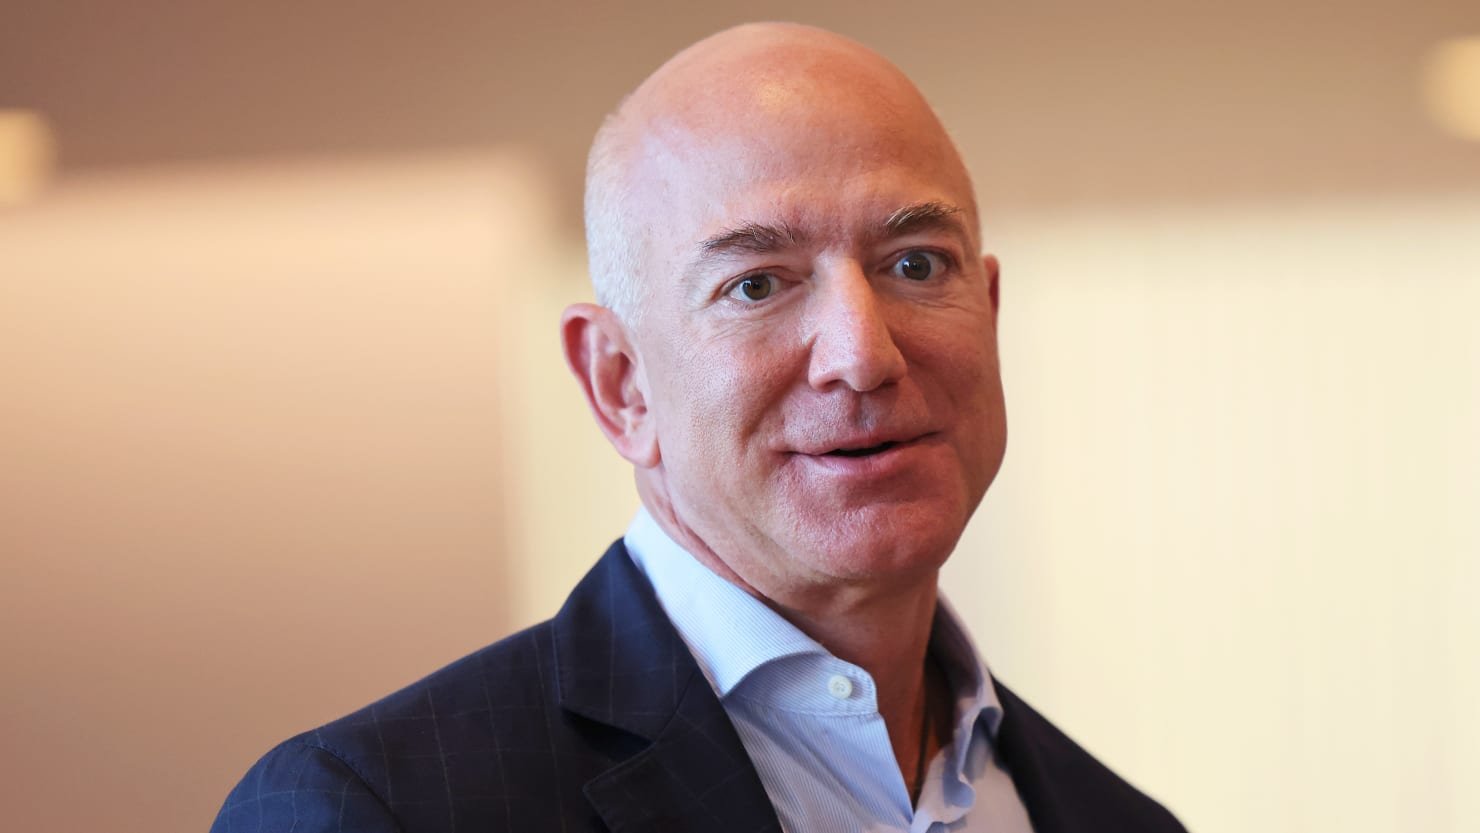 Amazon Founder Jeff Bezos Loses $20 Billion in a Week as Stock Market Tumbles